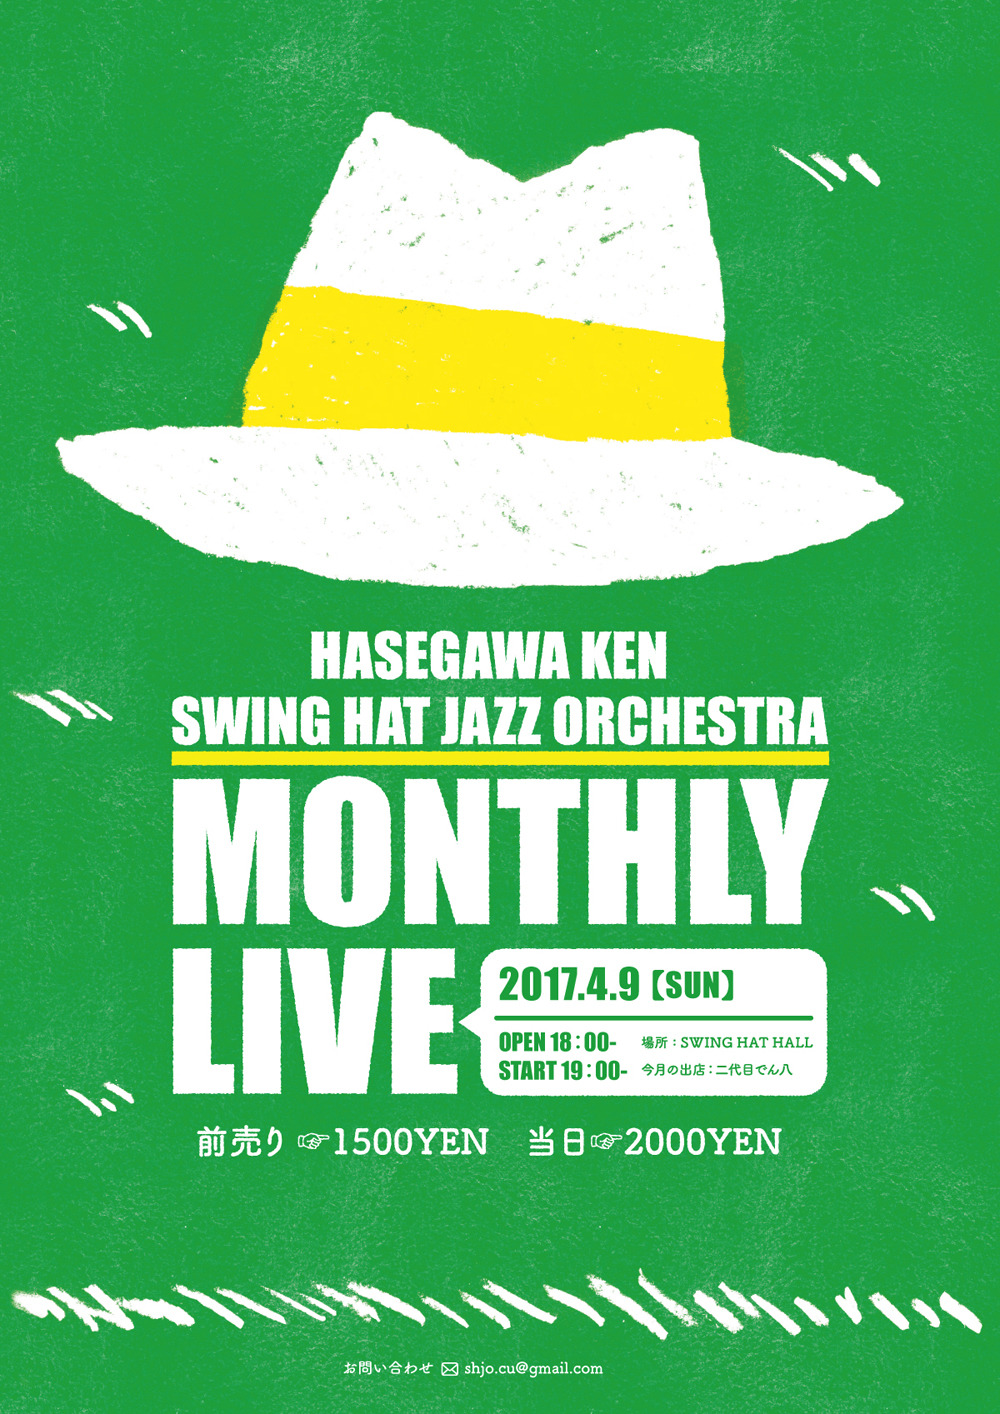 Hasegawa Chihiro 青森県弘前市を拠点にジャズ演奏活動をするnpo Hasegawa Ken Swing Hat